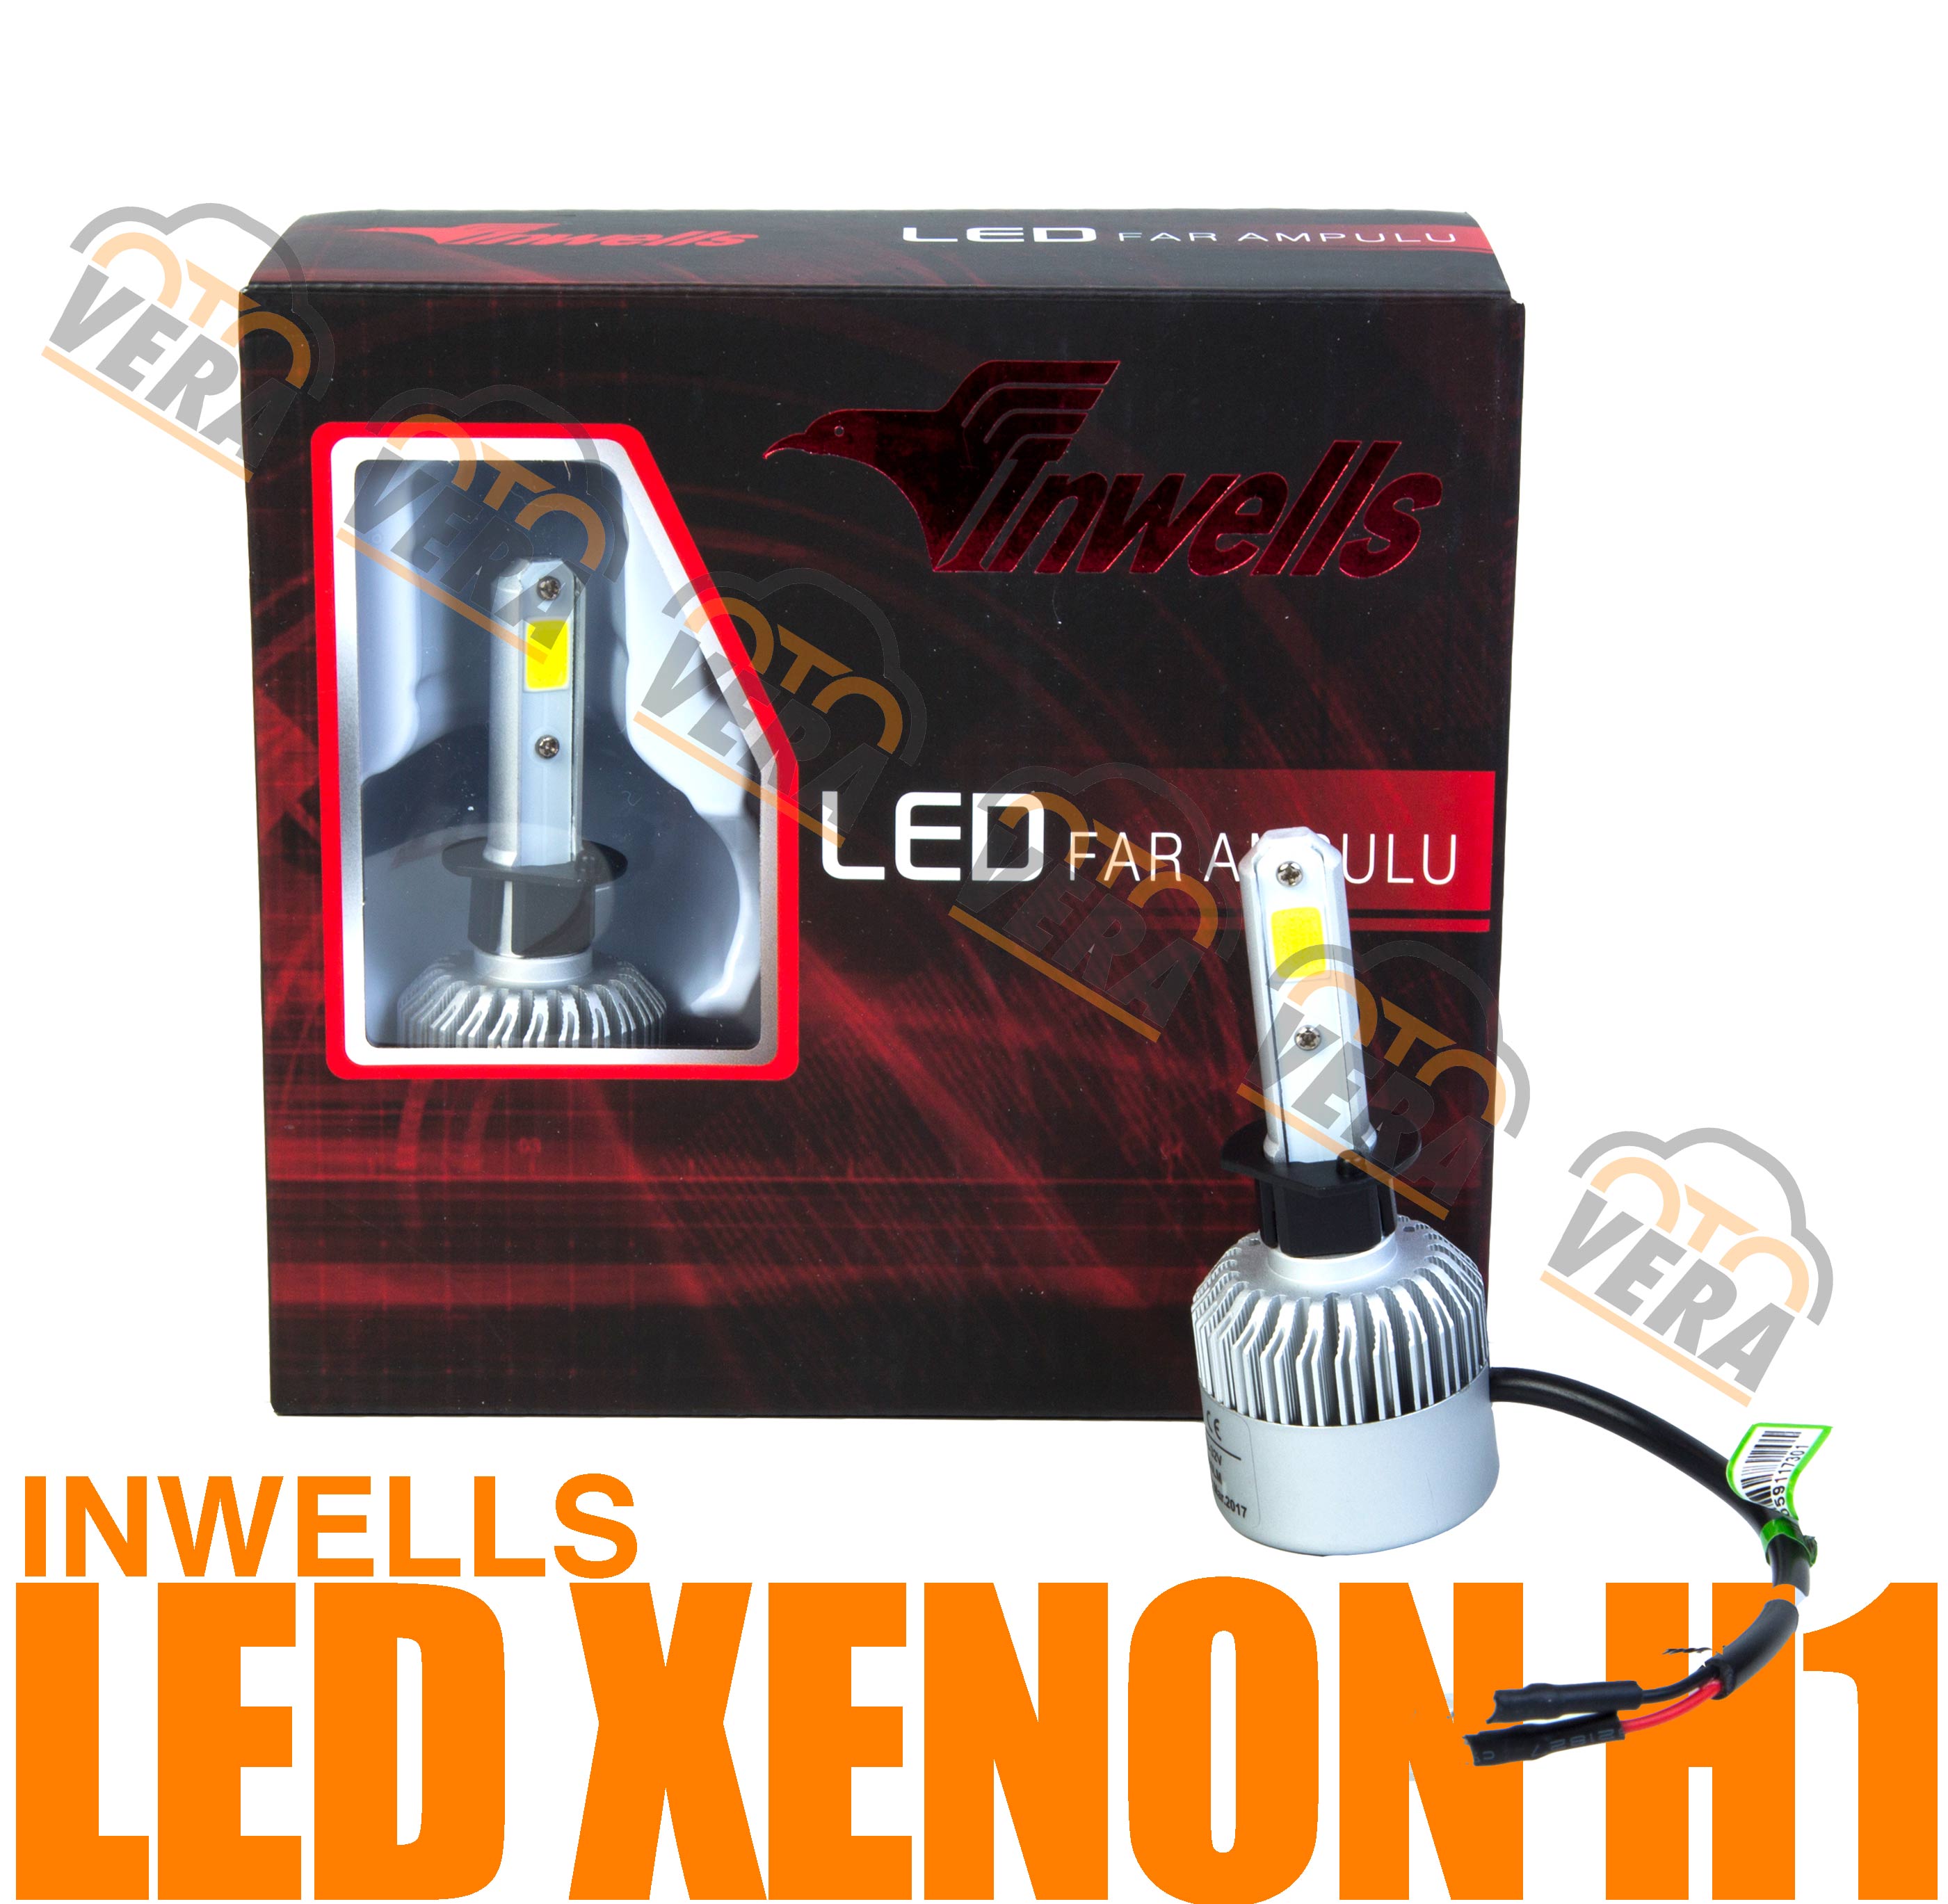 INWELLS LED XENON ZENON H1 Şimşek etkili 8000 lm max. ışık 6500 K